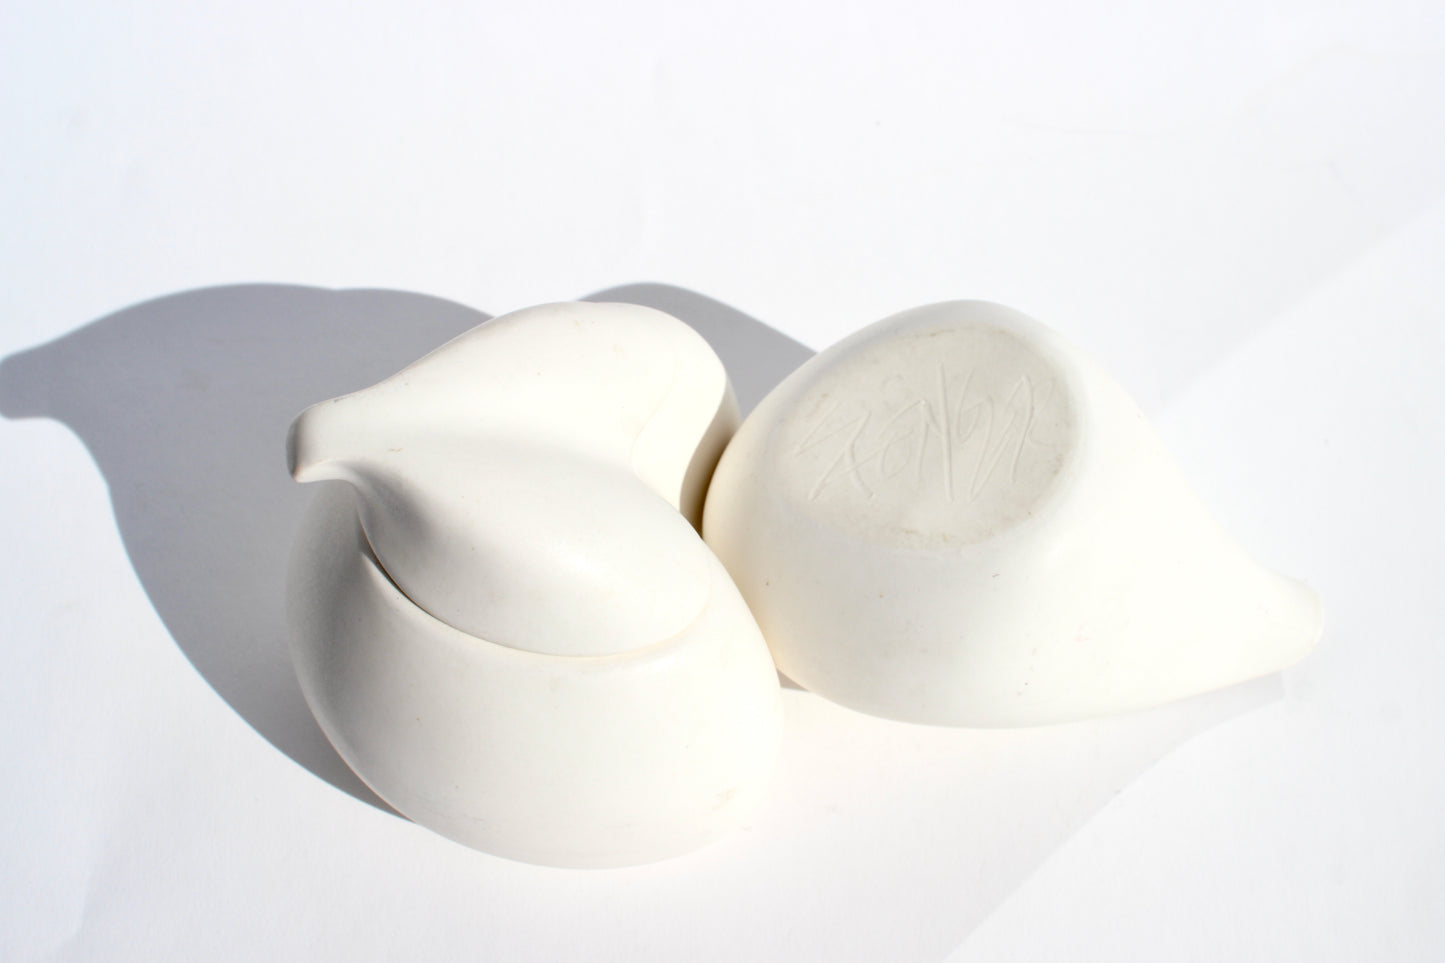 modernist sculptural sugar + cream set